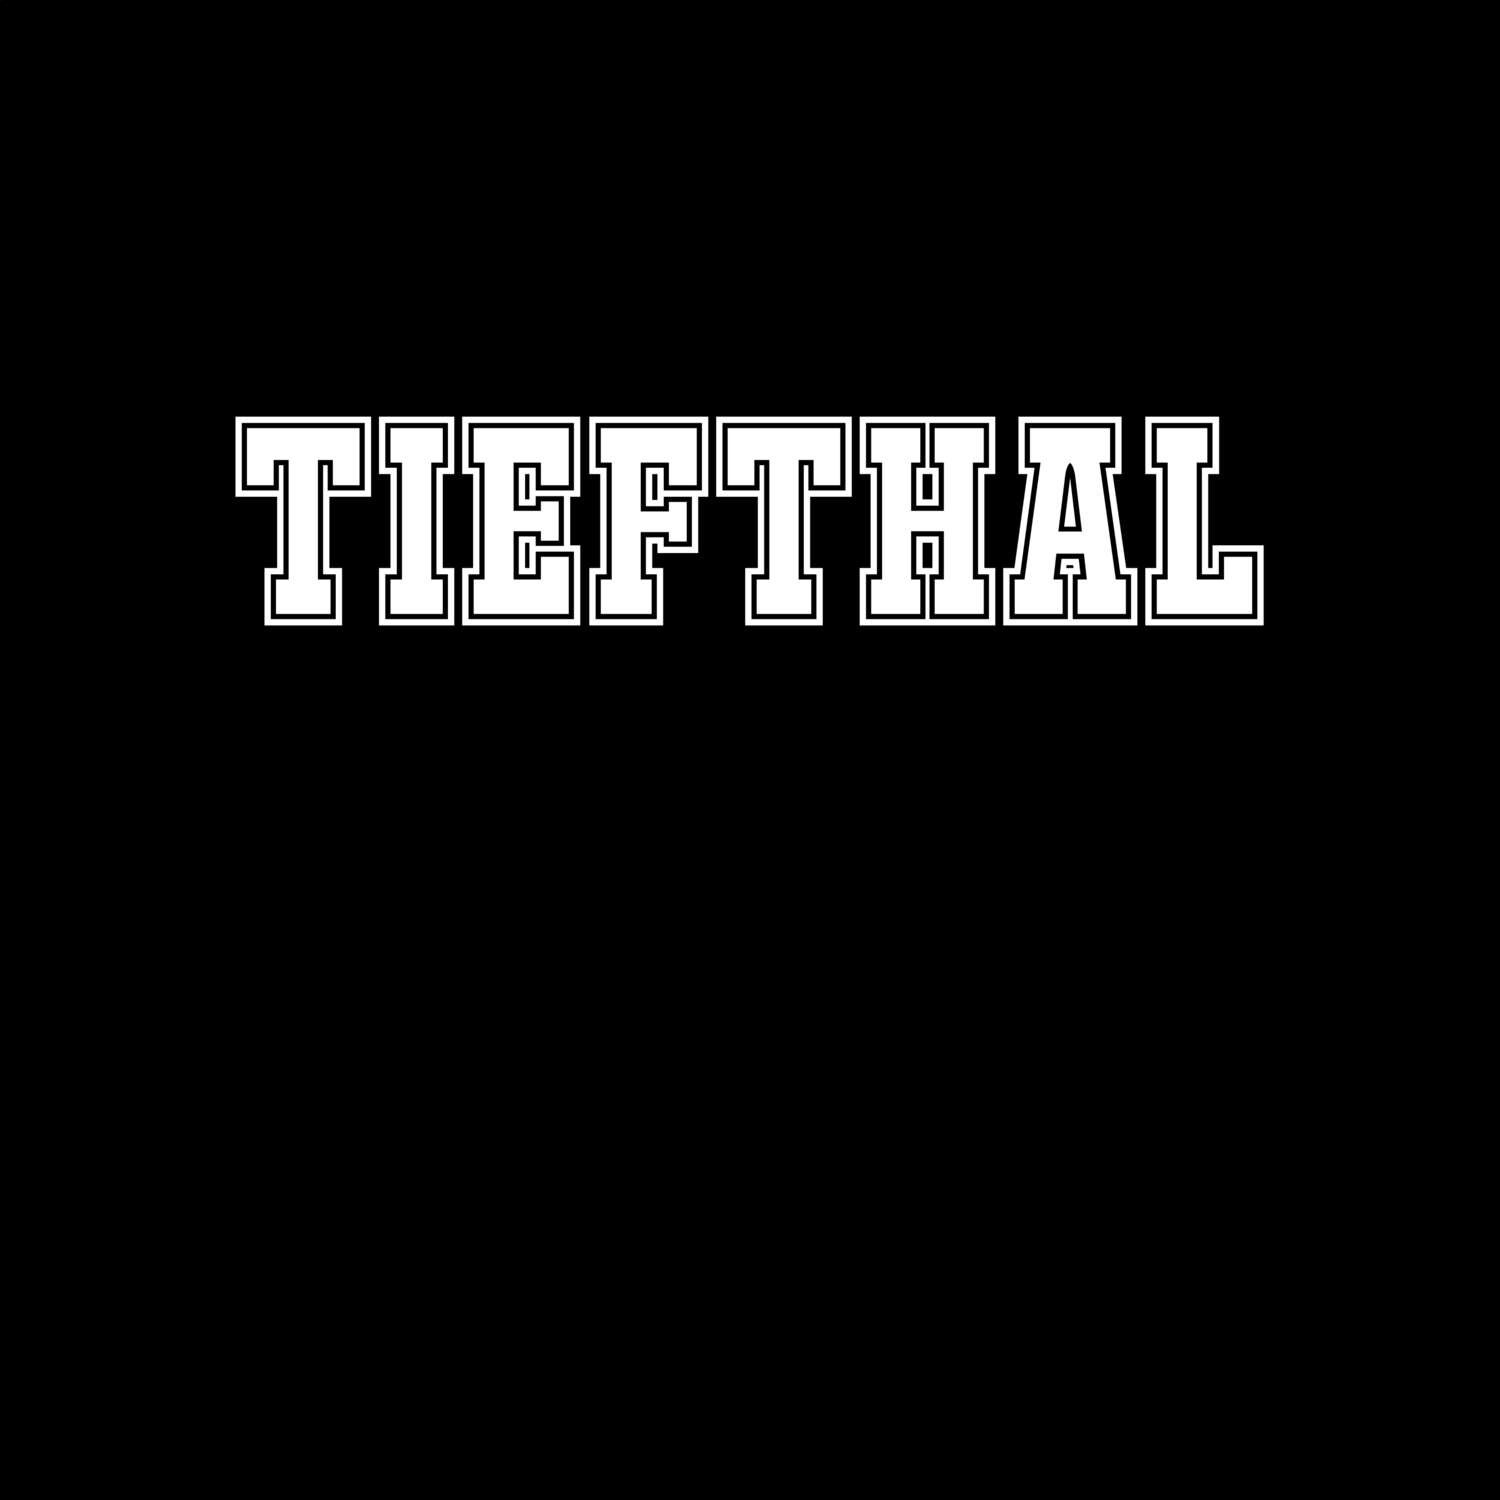 Tiefthal T-Shirt »Classic«